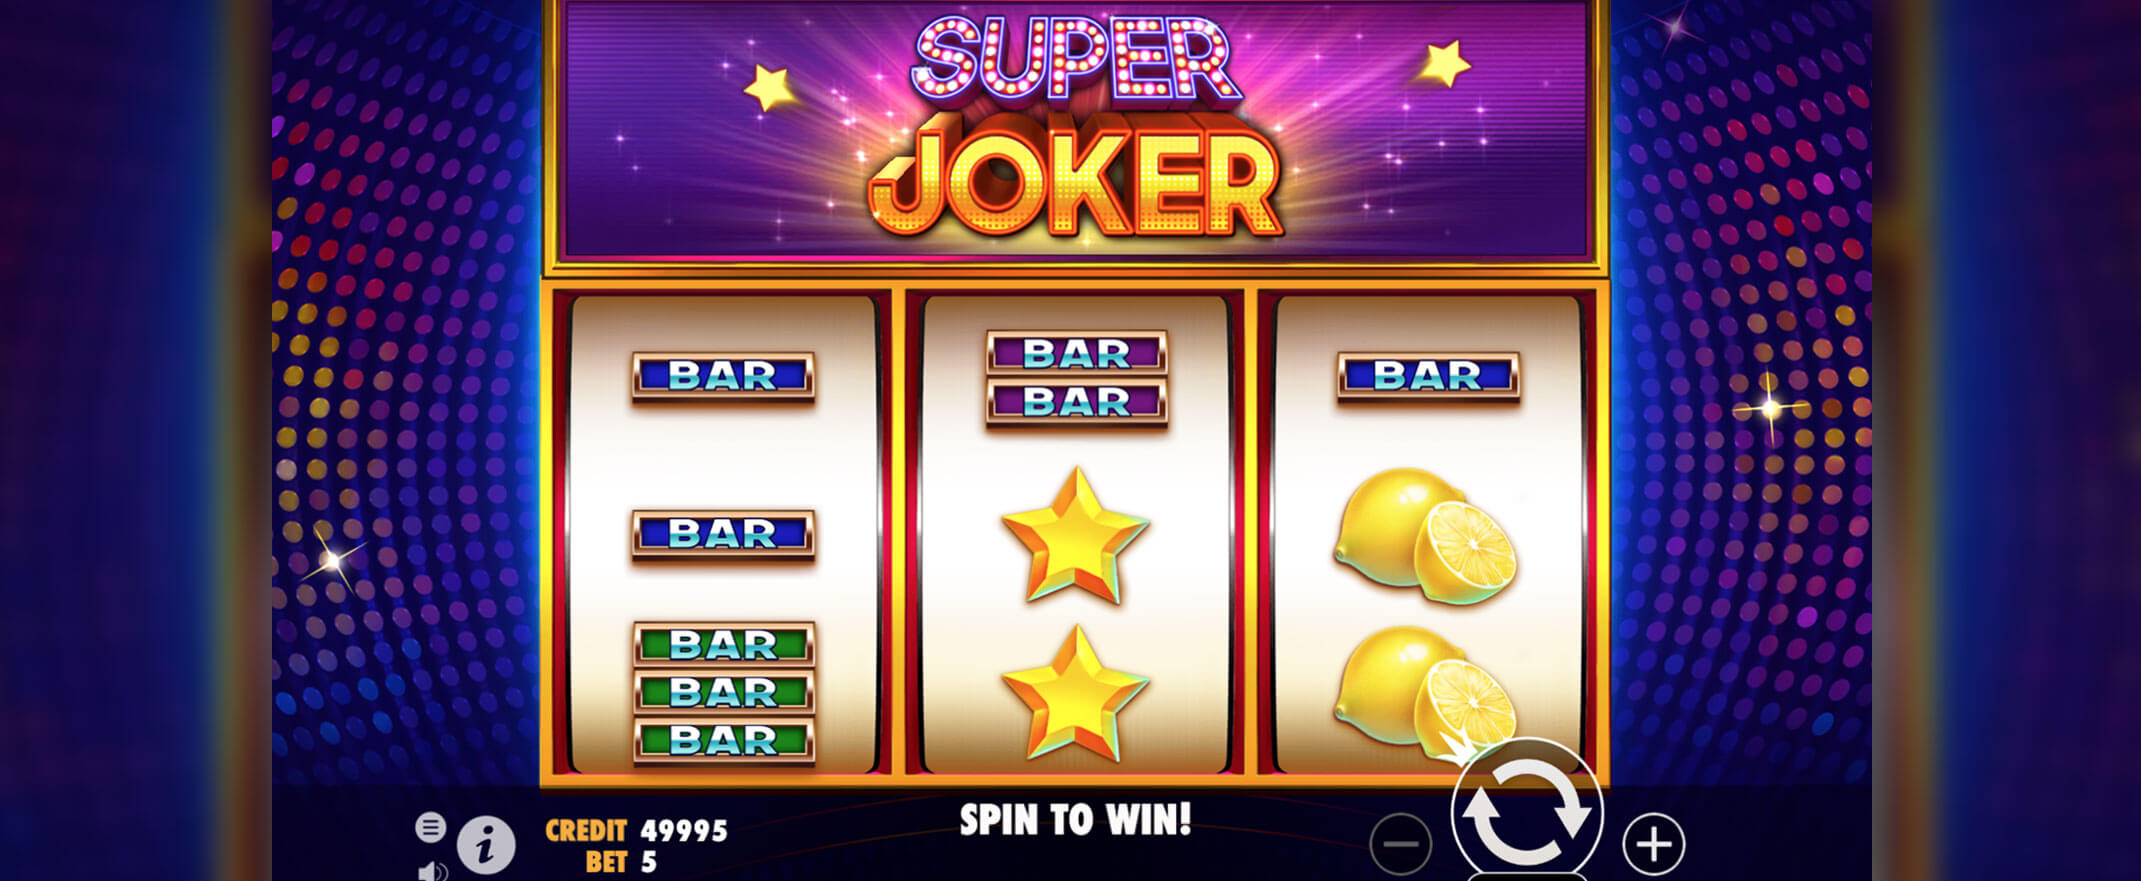 Super Joker peliautomaatti Pragmatic Playlta